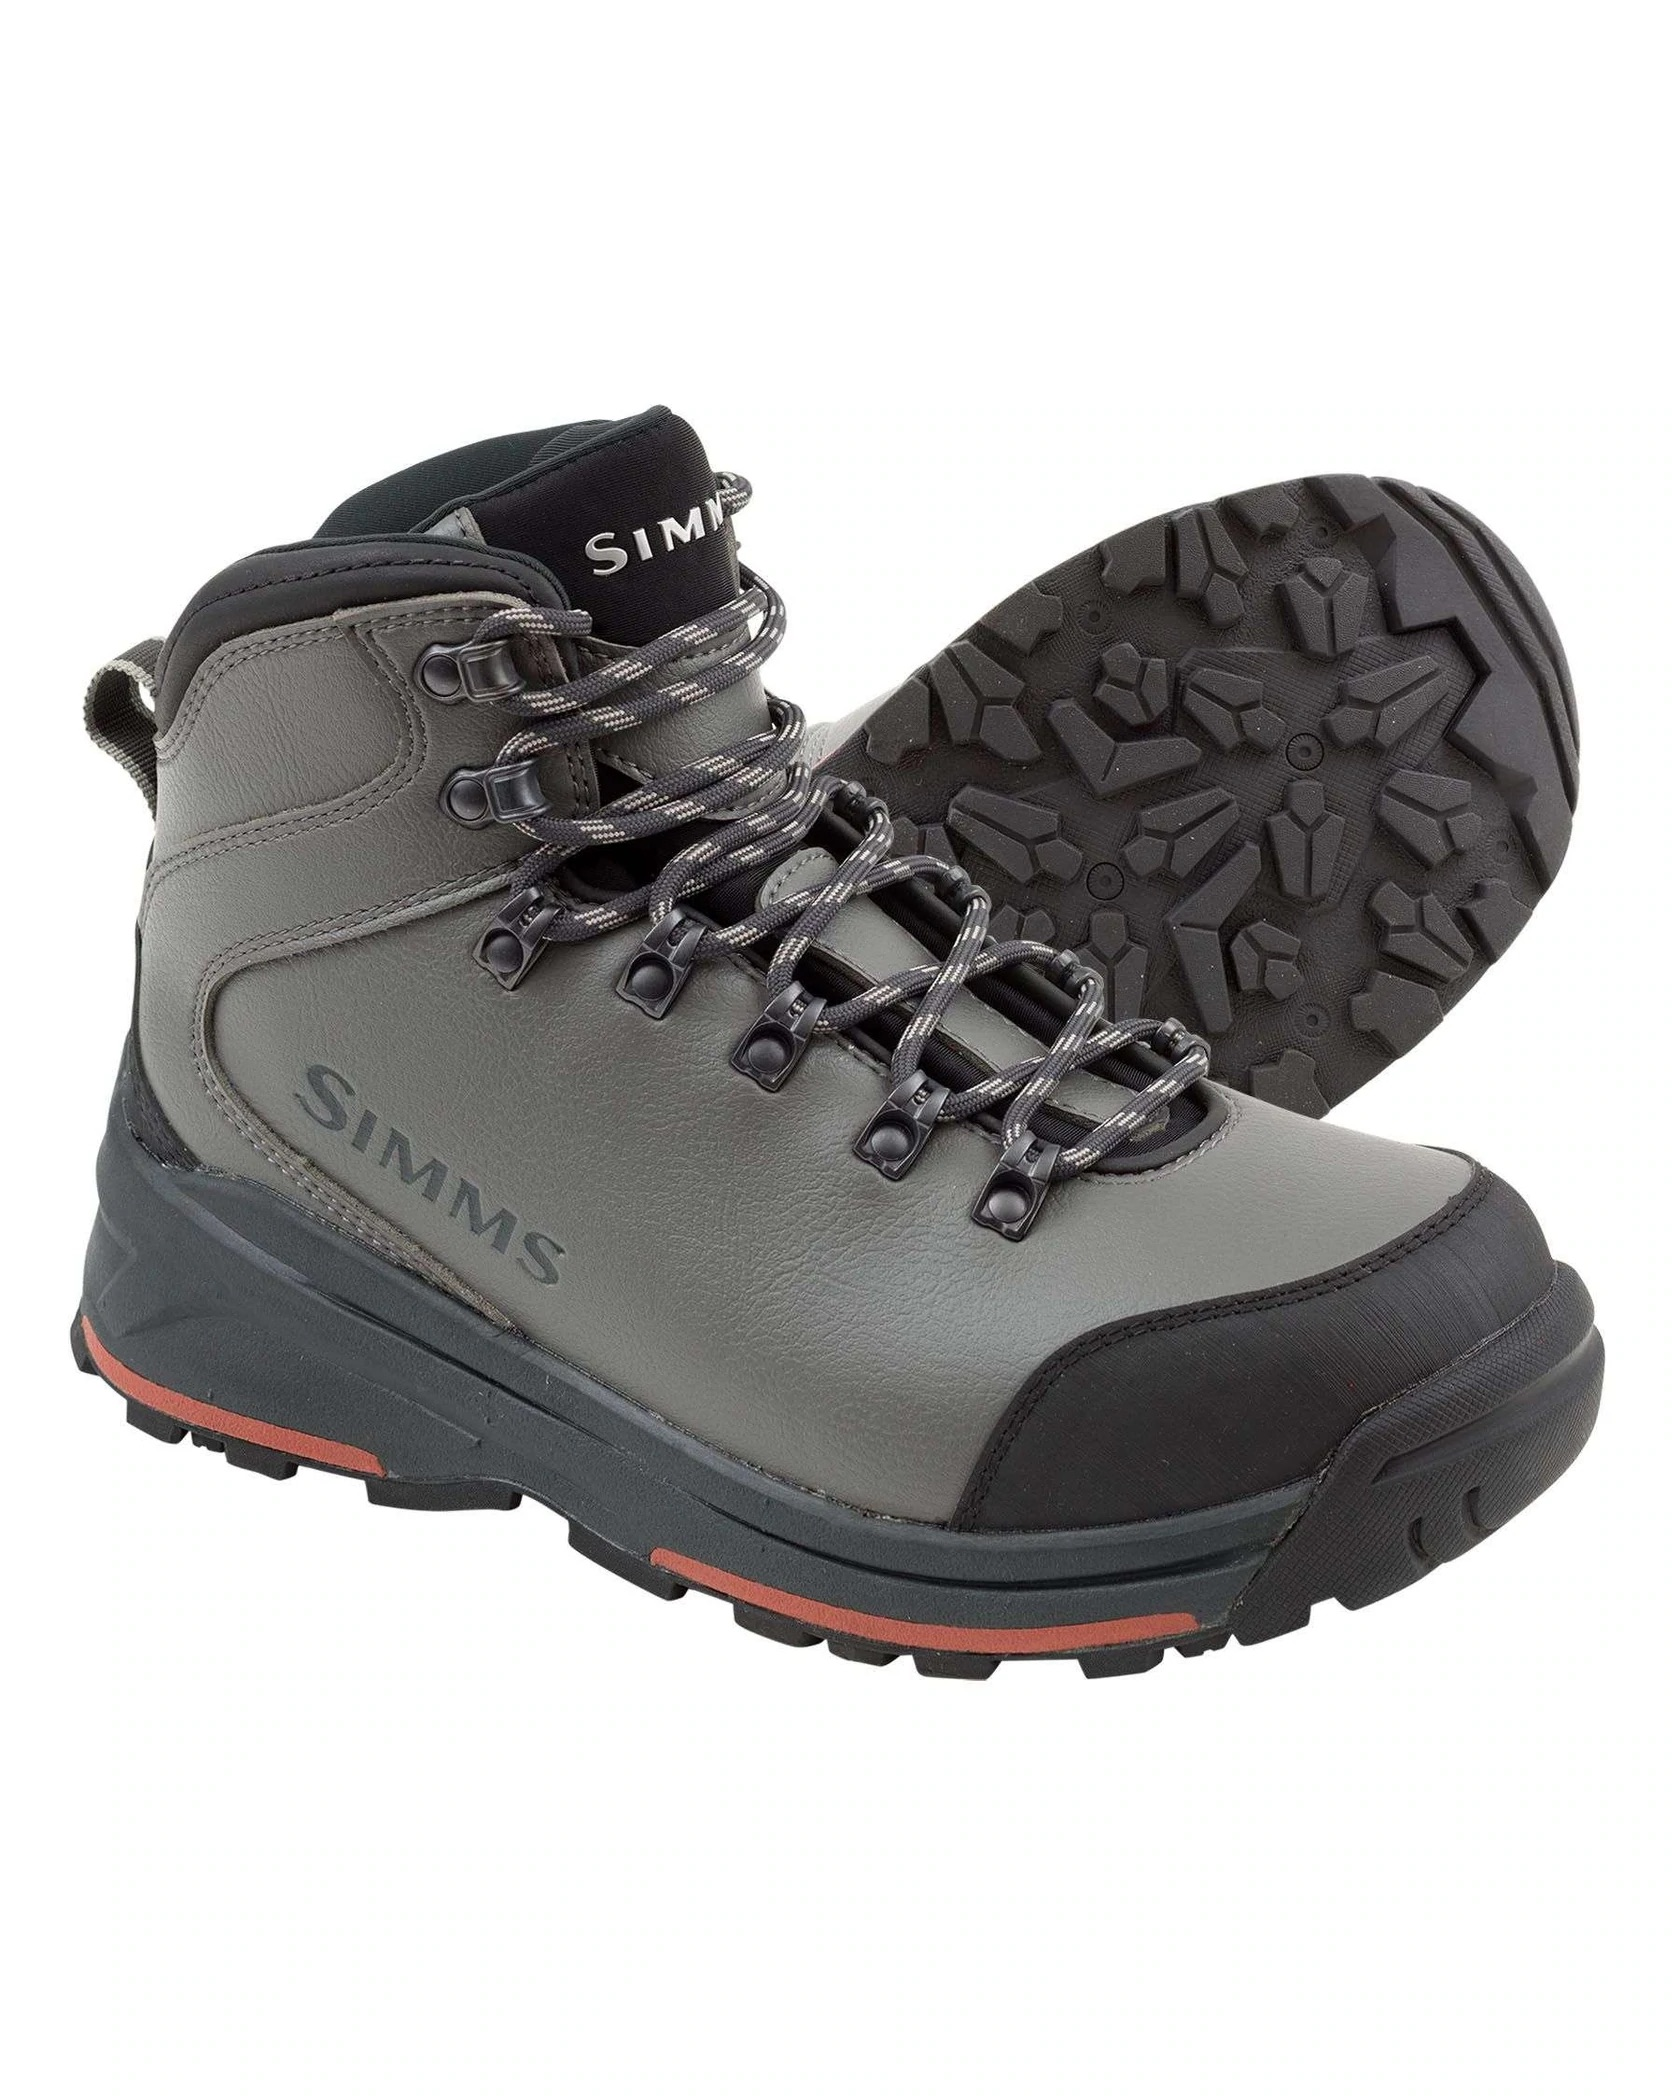 Simms W's Freestone Boot - Felt - Size 10